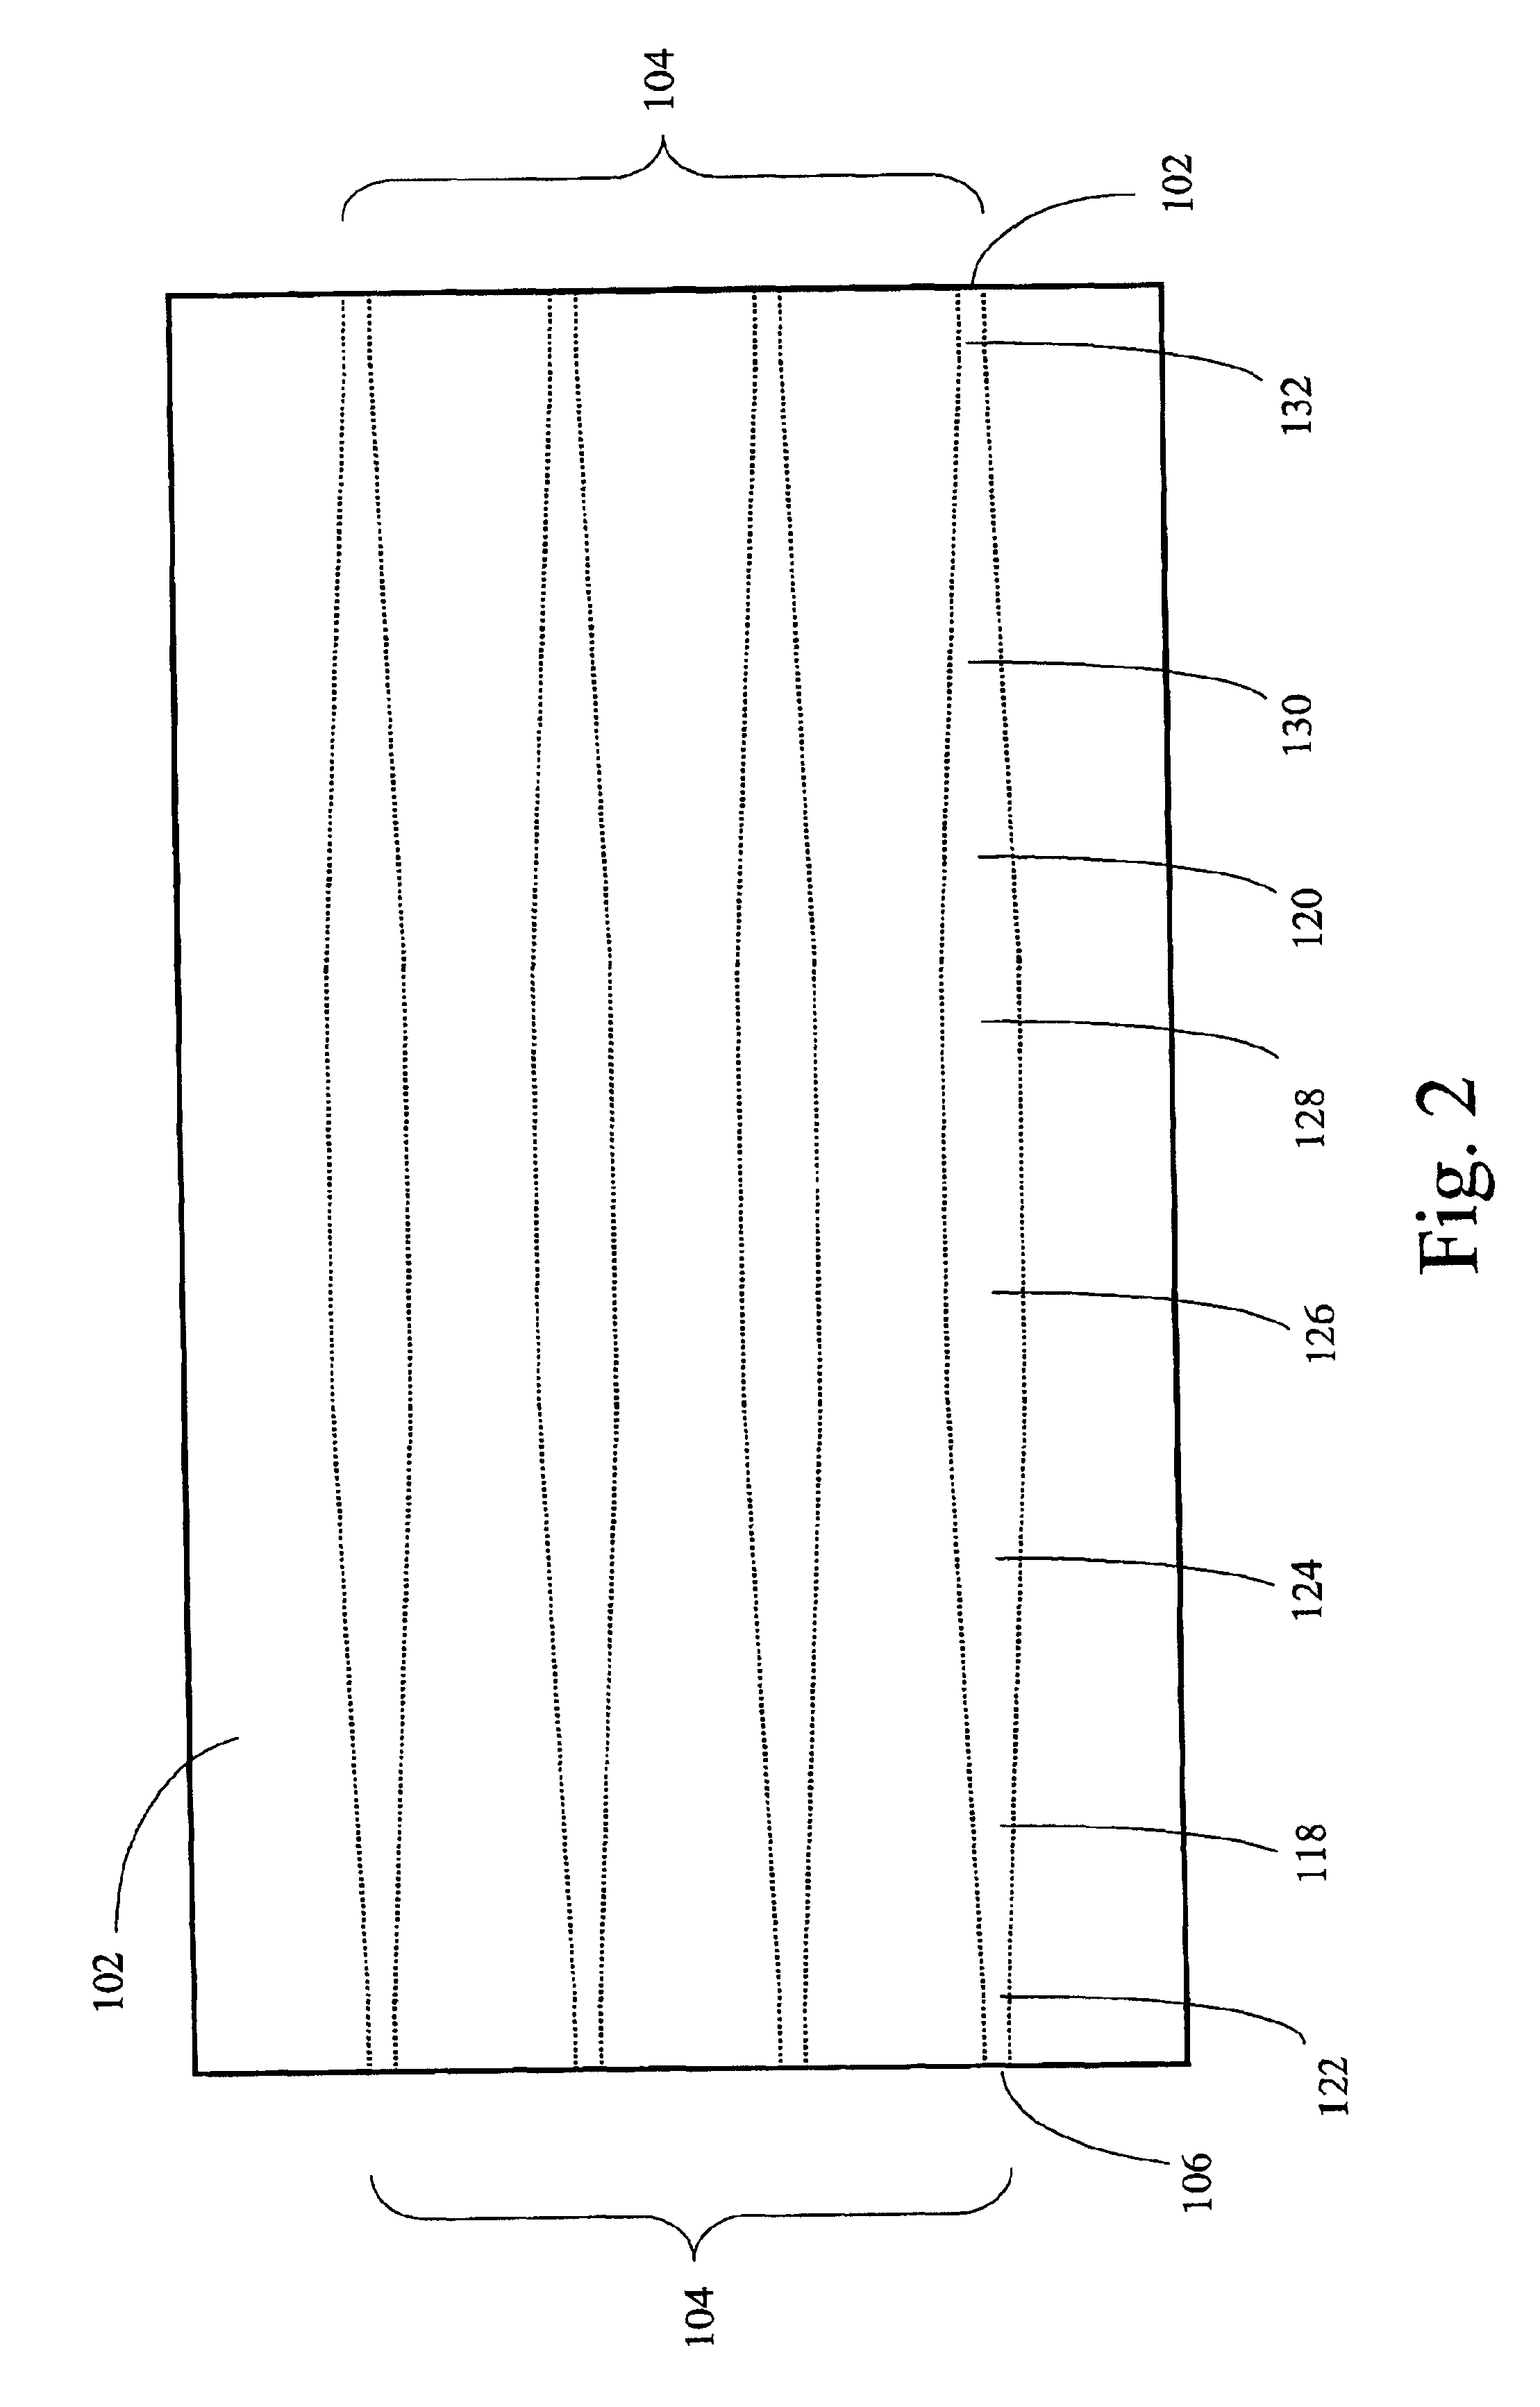 Integrated optical isolator array